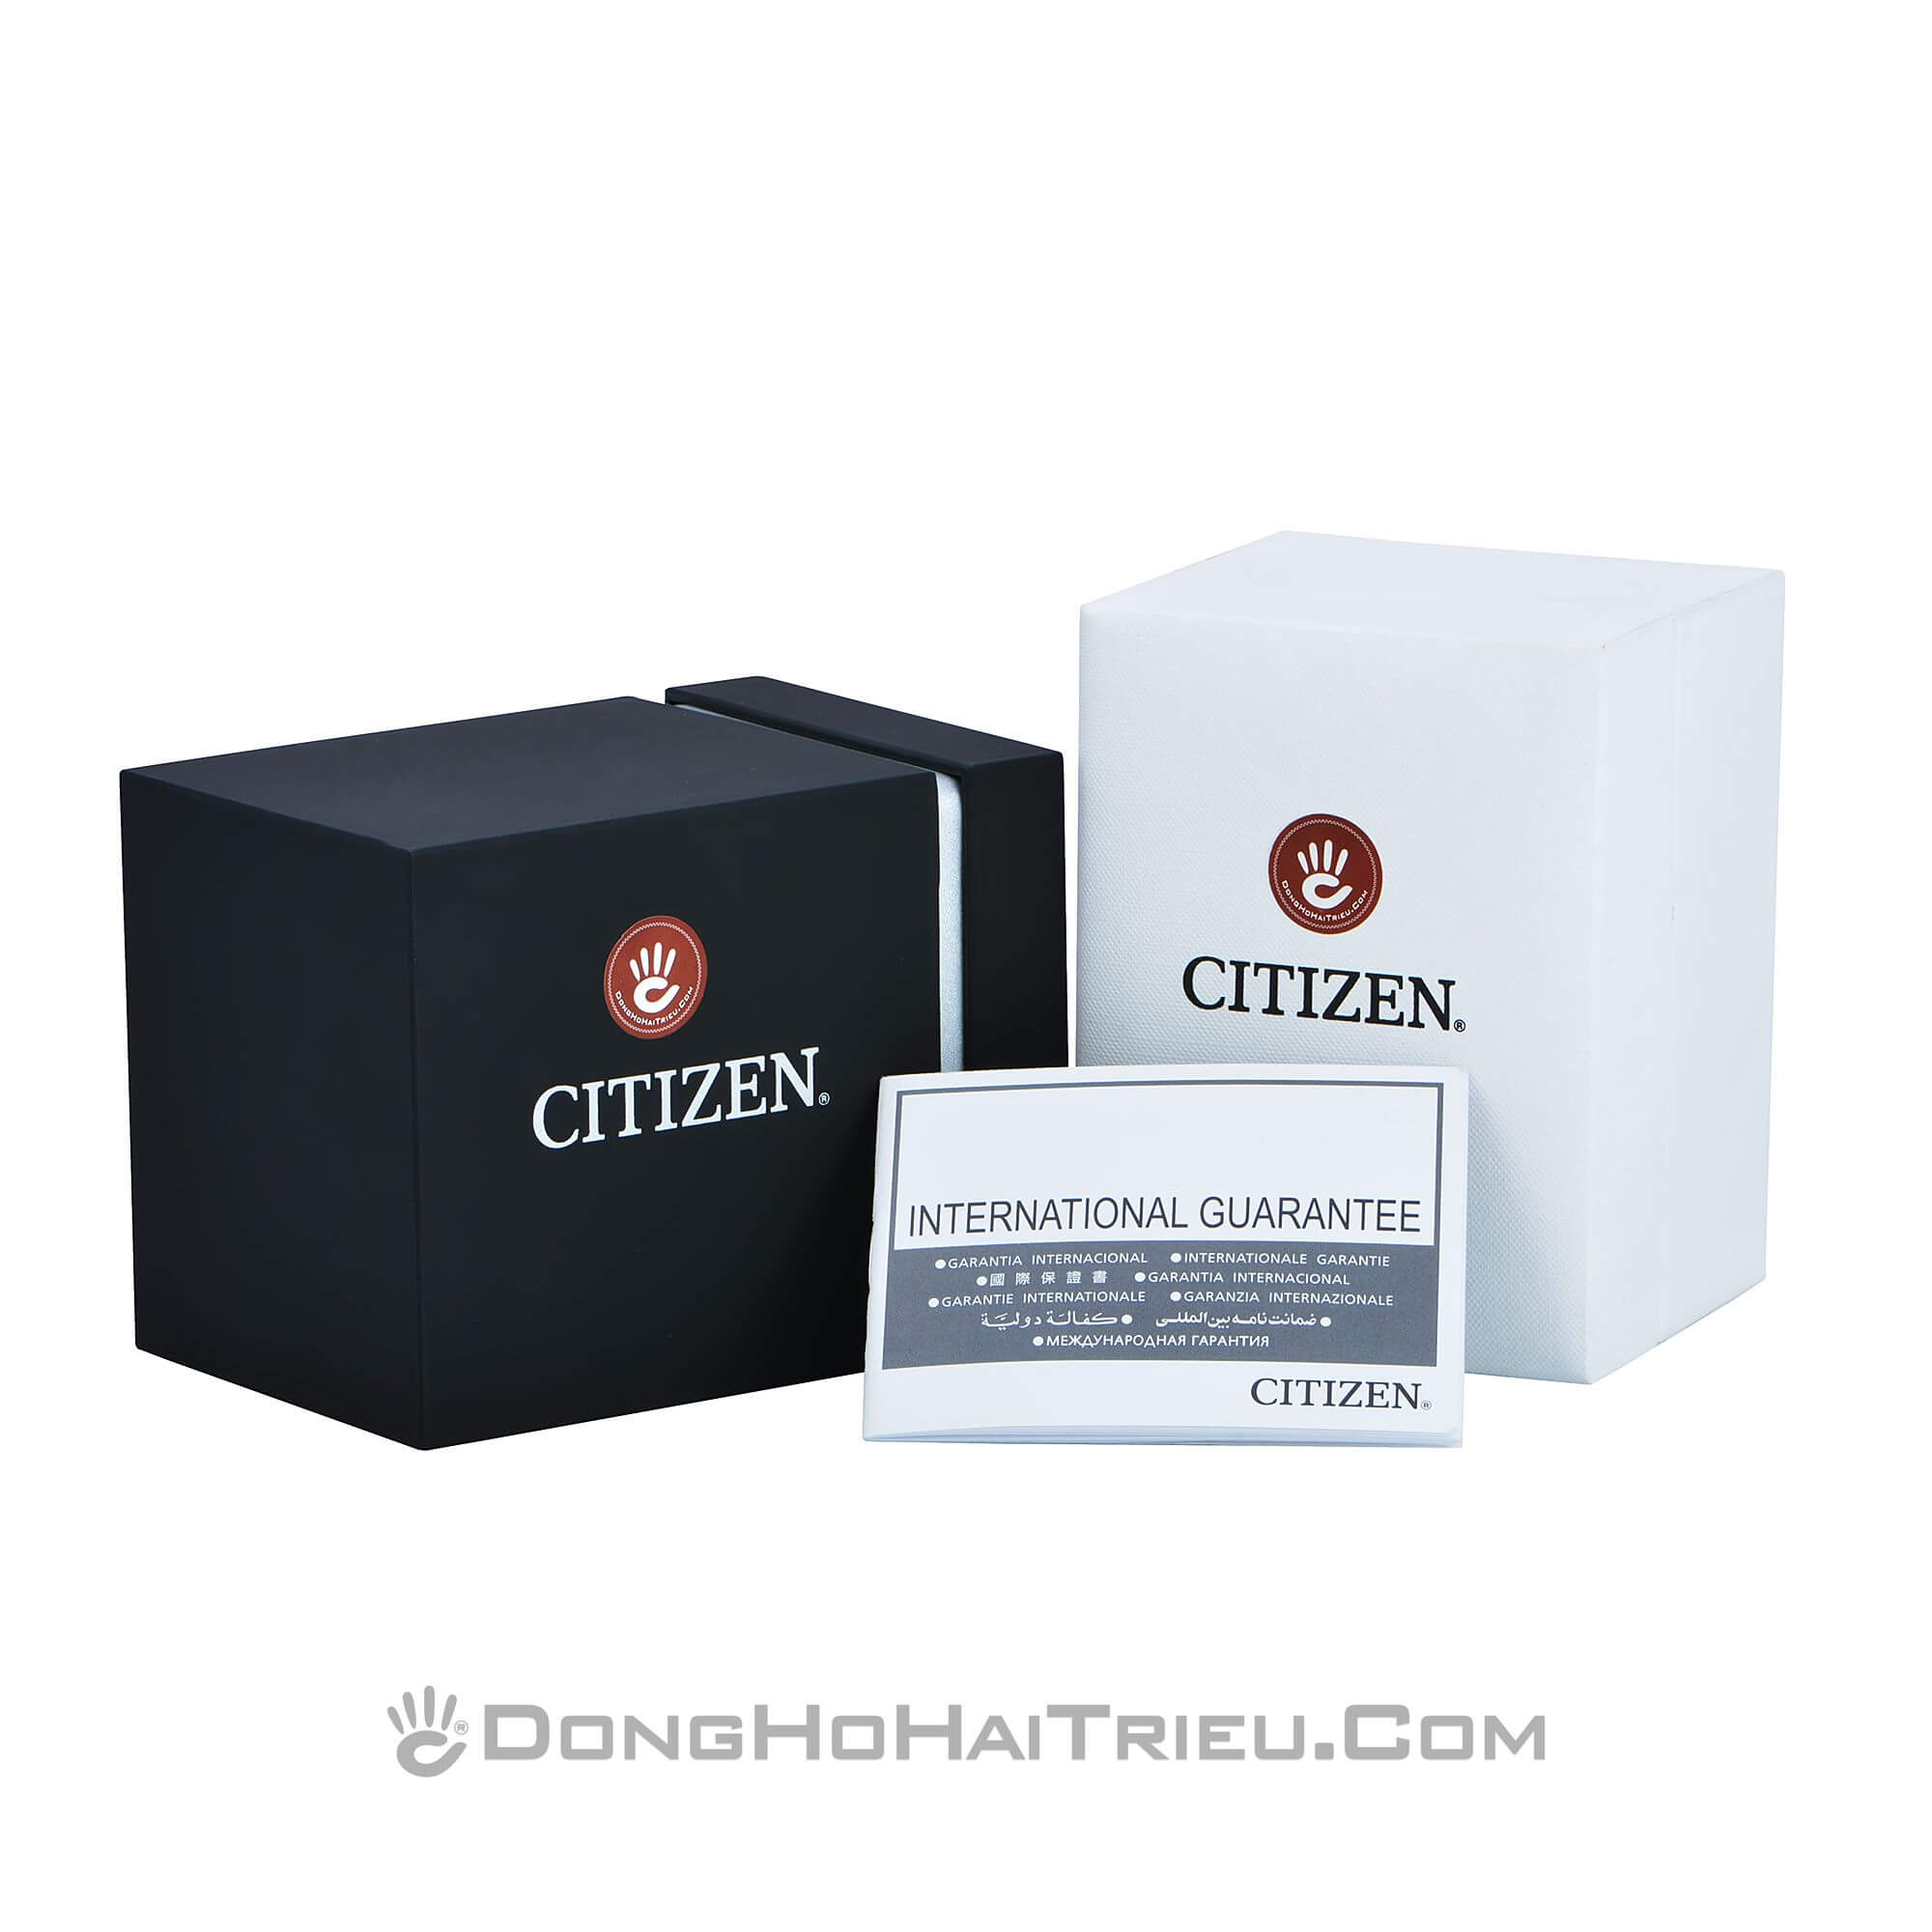 Citizen-Box1